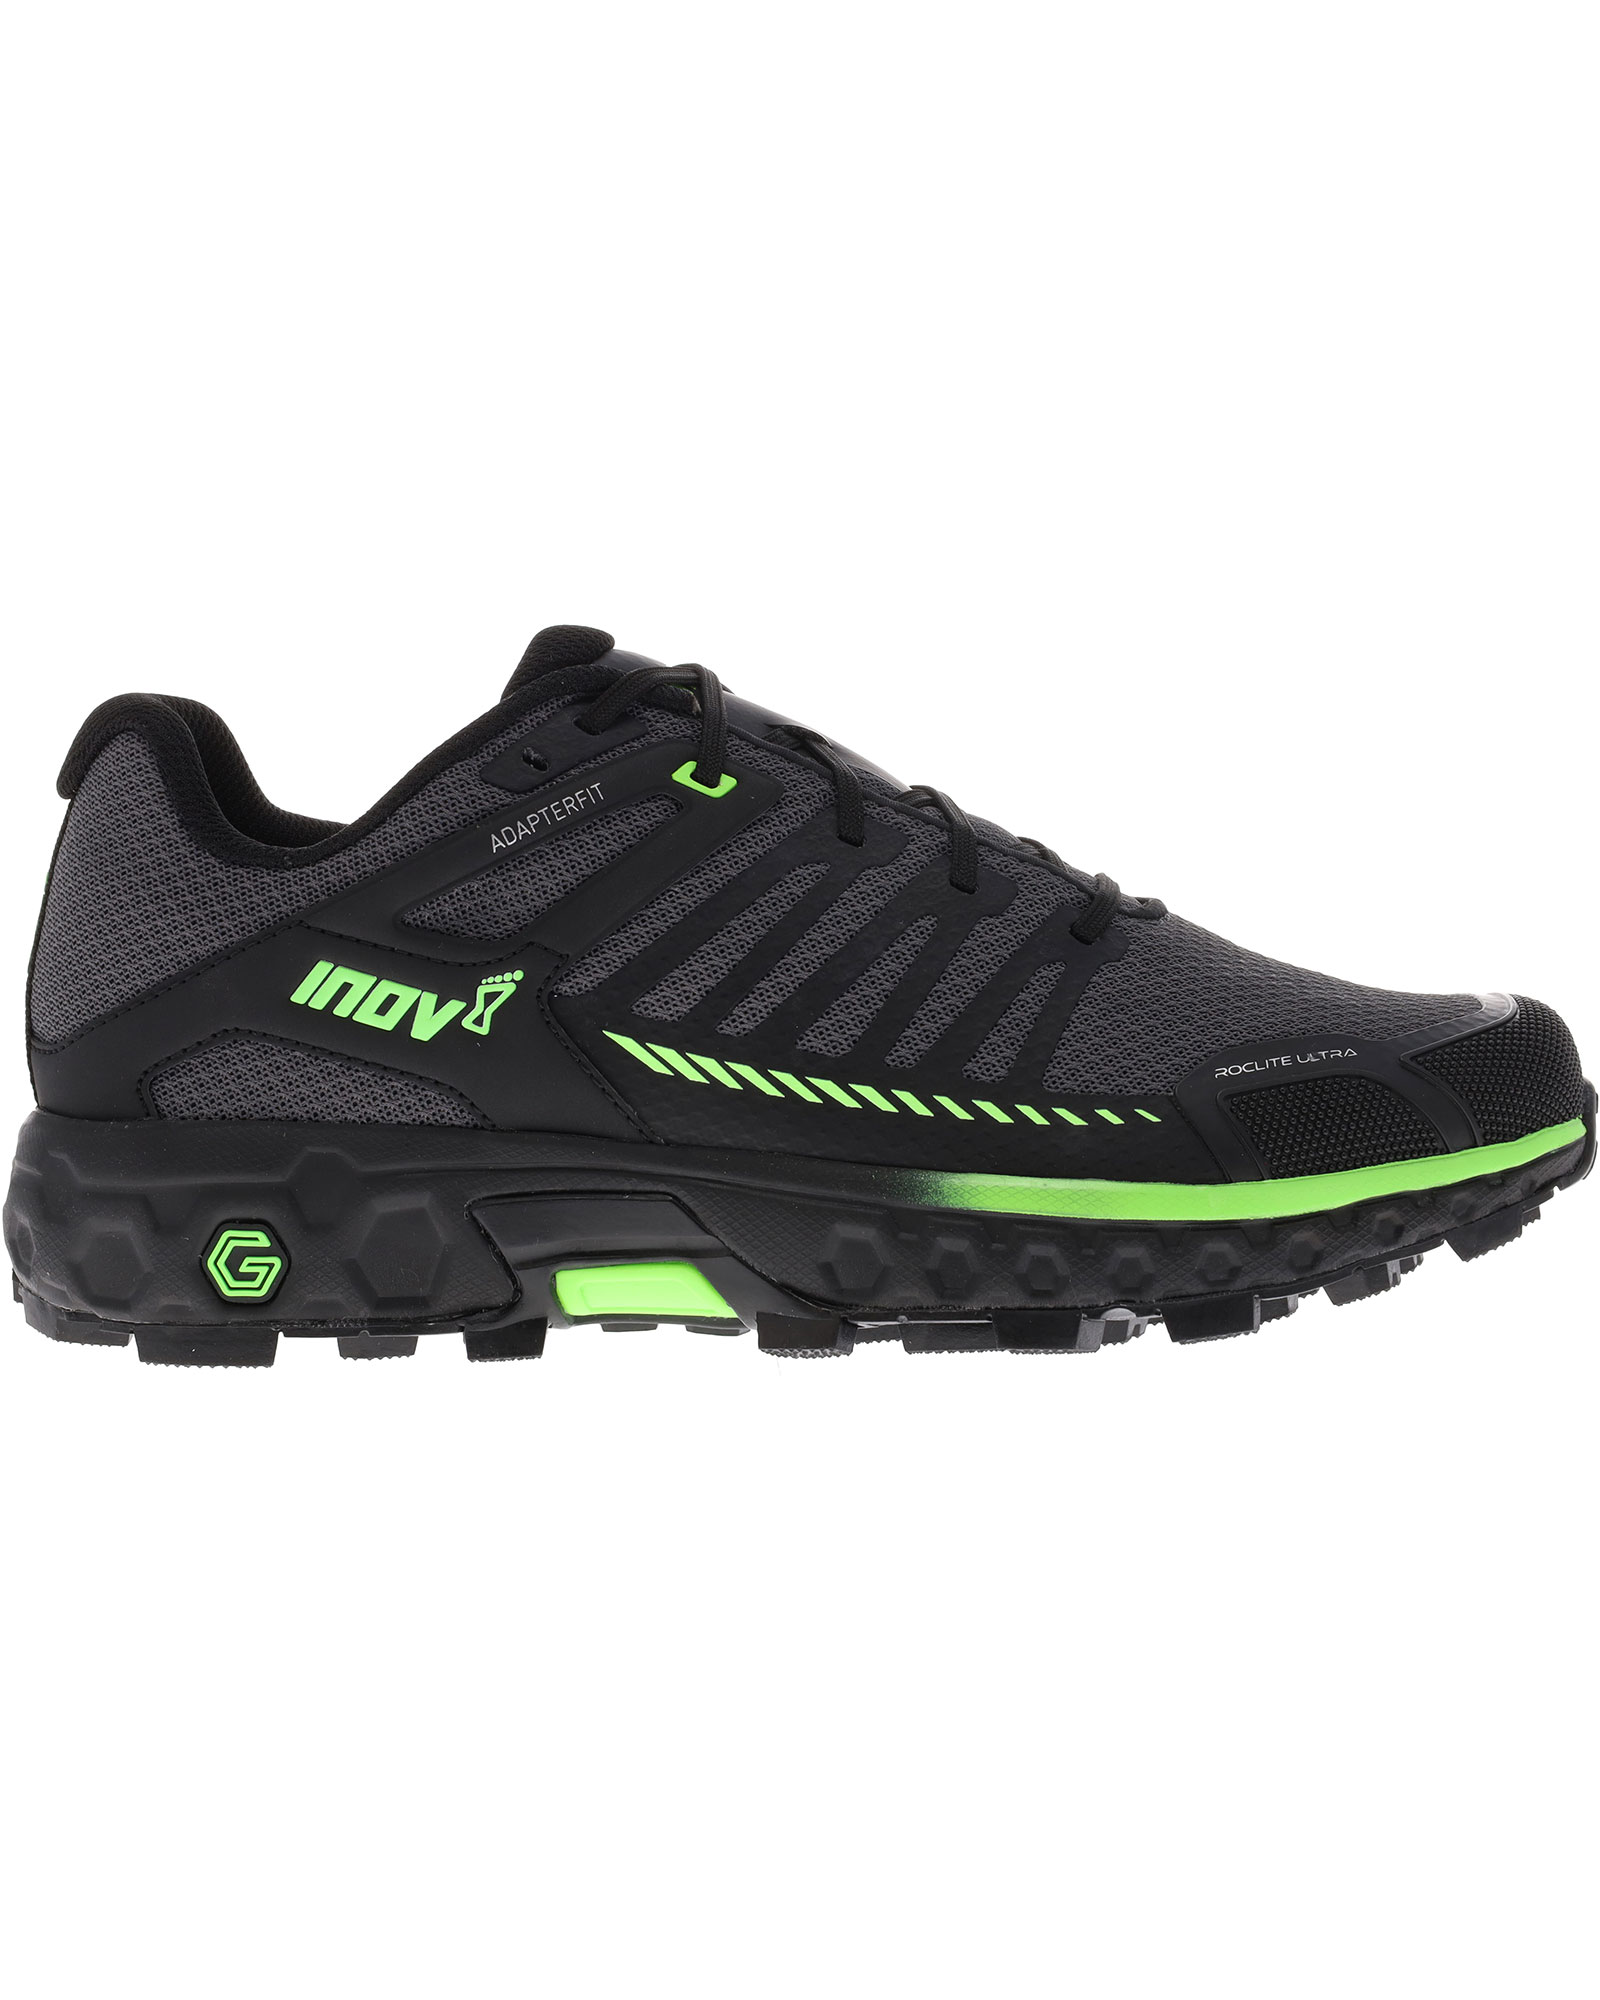 Inov 8 Roclite Ultra G 320 Men’s Shoes - Black/Green UK 7.5